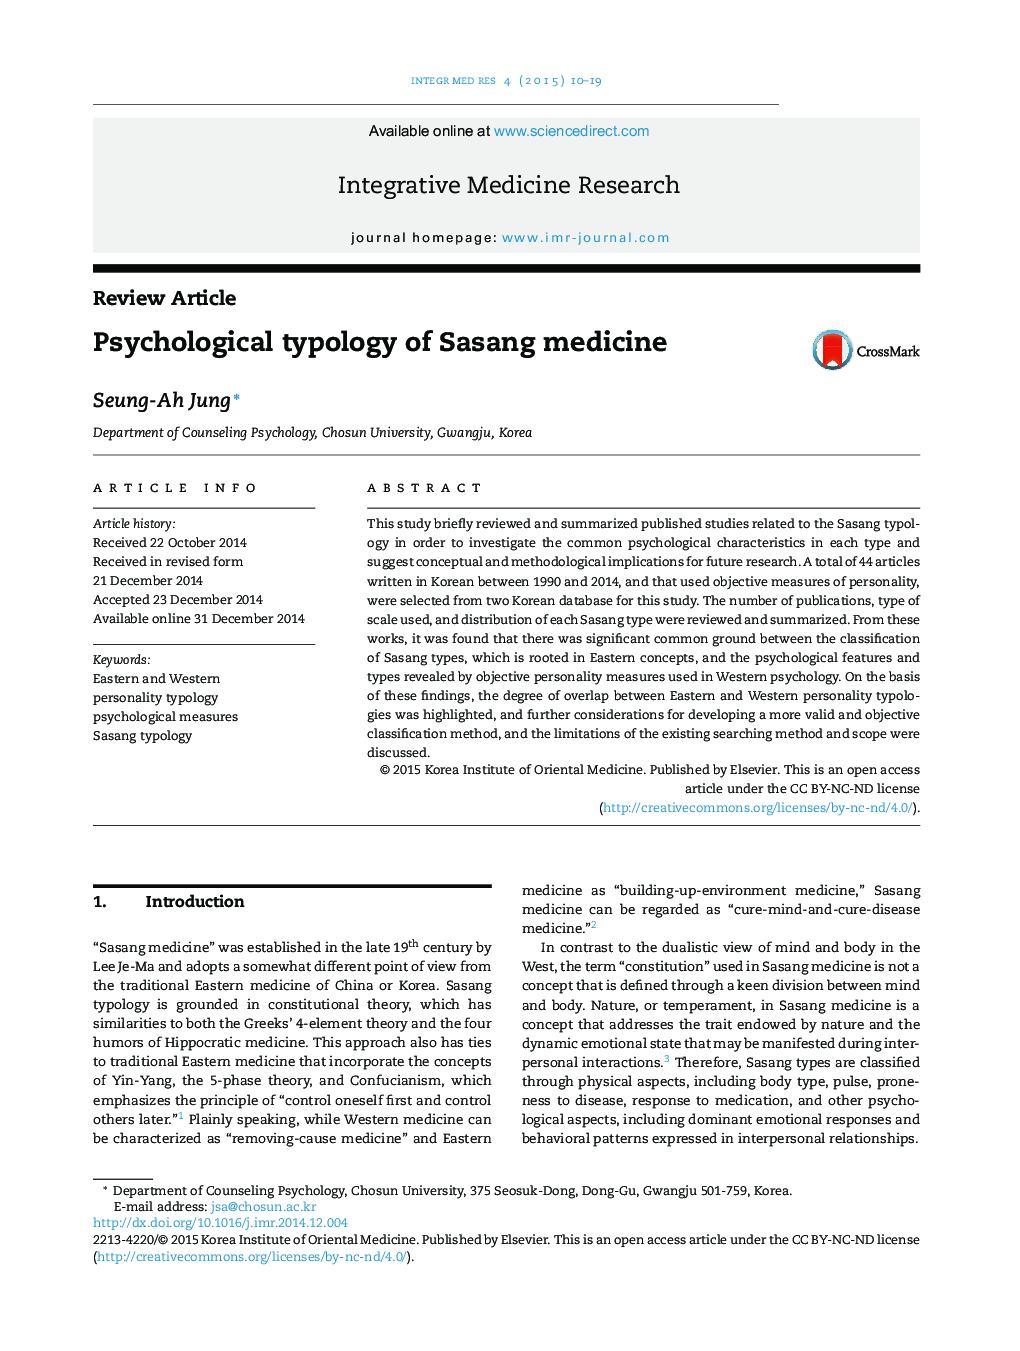 Psychological typology of Sasang medicine